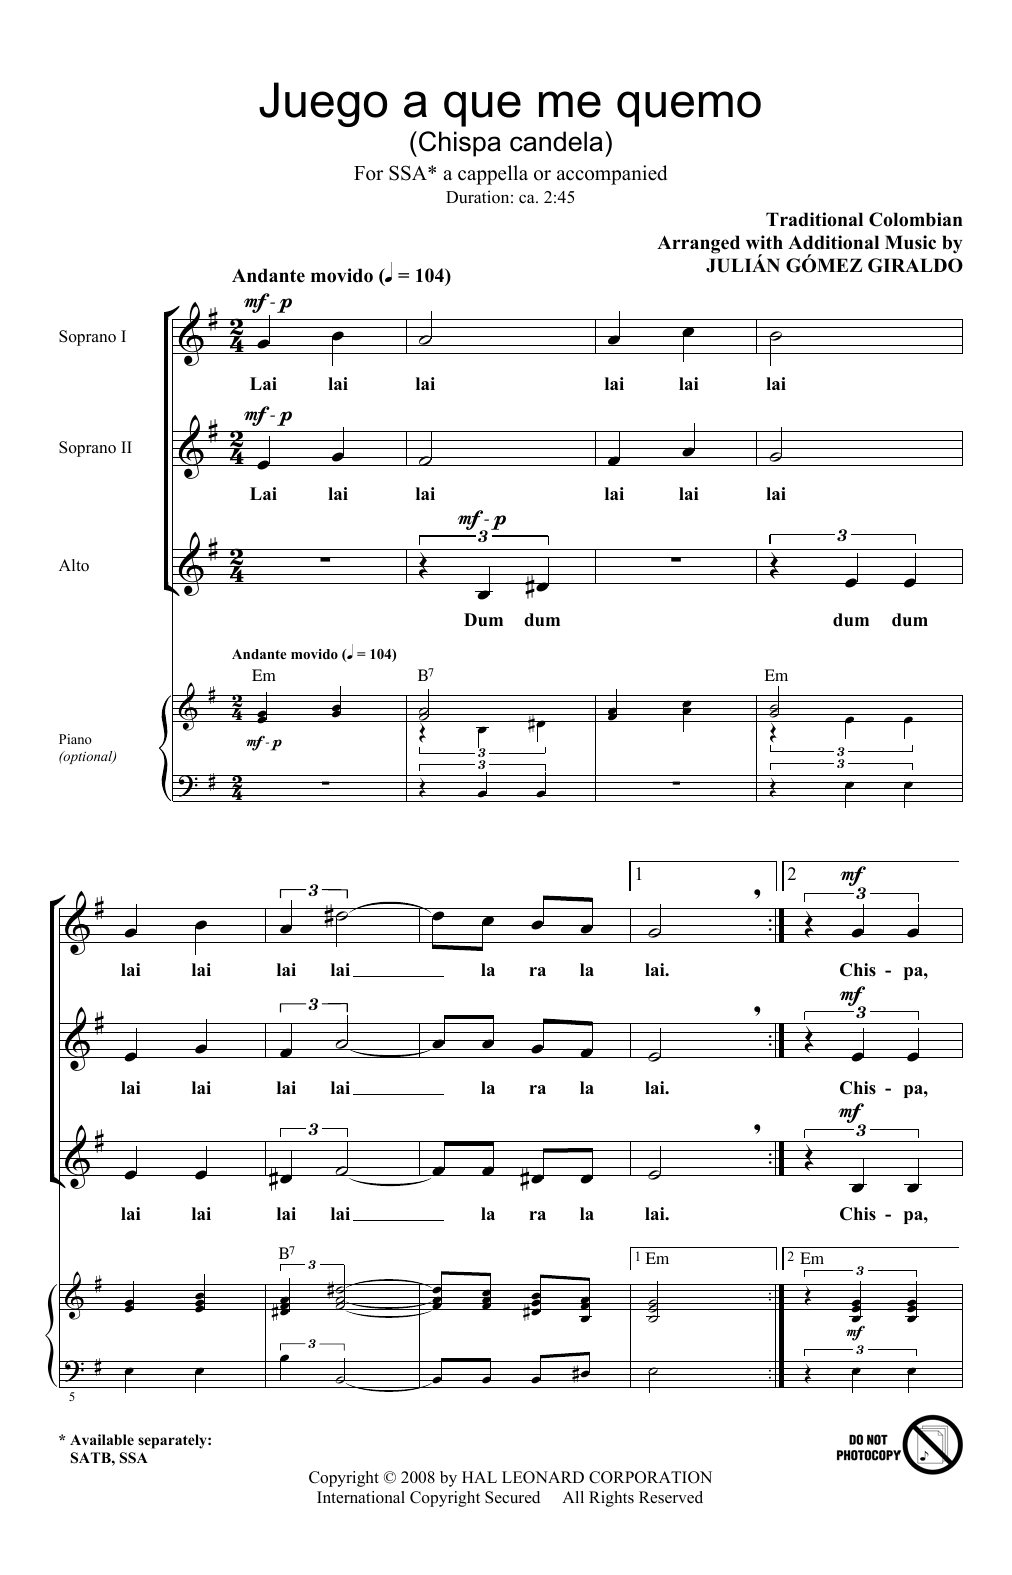 Julian Gomez Giraldo Juego A Que Me Quemo (Chispa Candela) Sheet Music Notes & Chords for SSA - Download or Print PDF